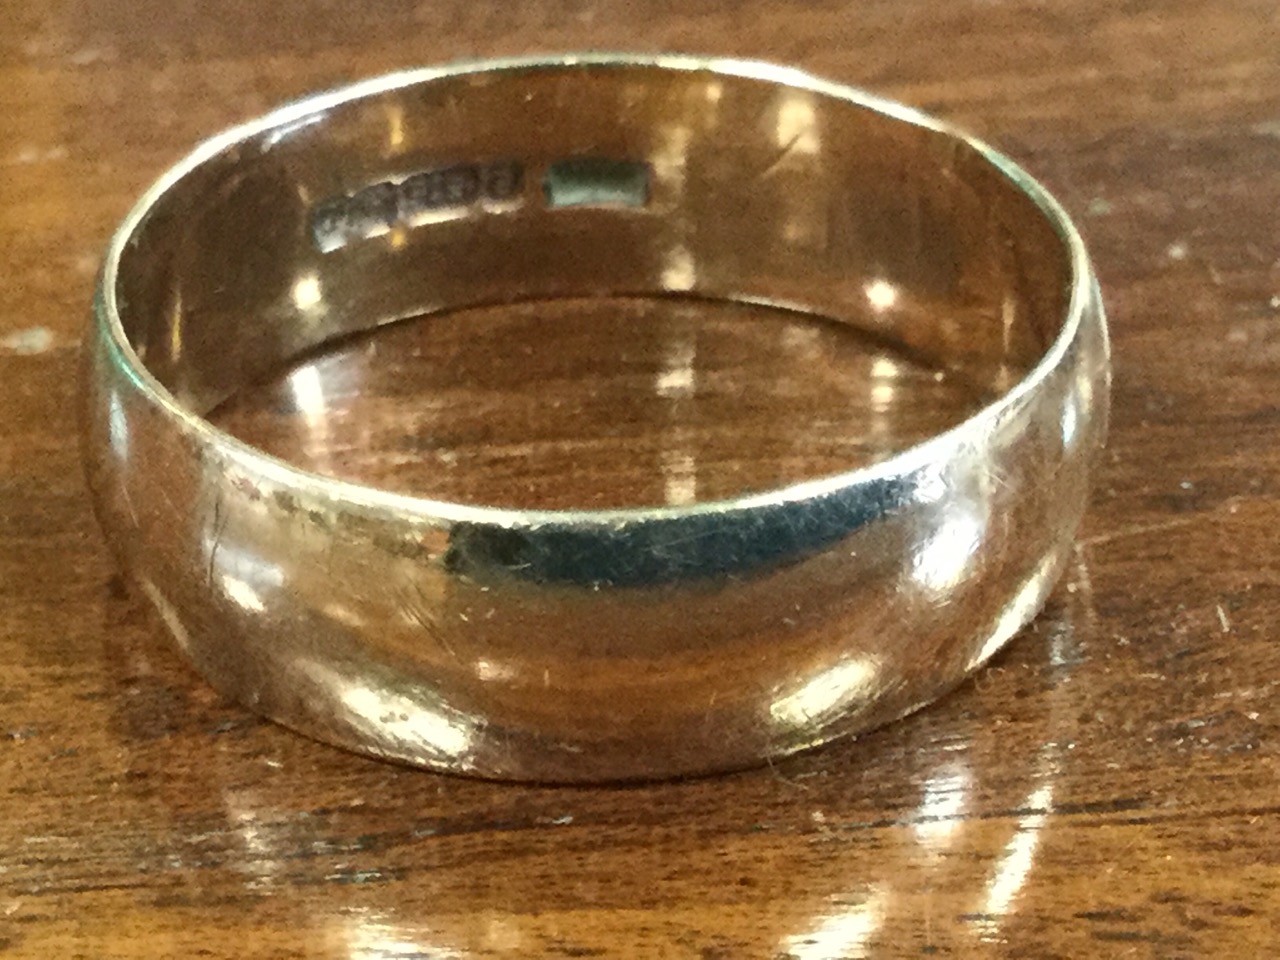 A plain 9ct gold wedding band - size U/V. (4g)